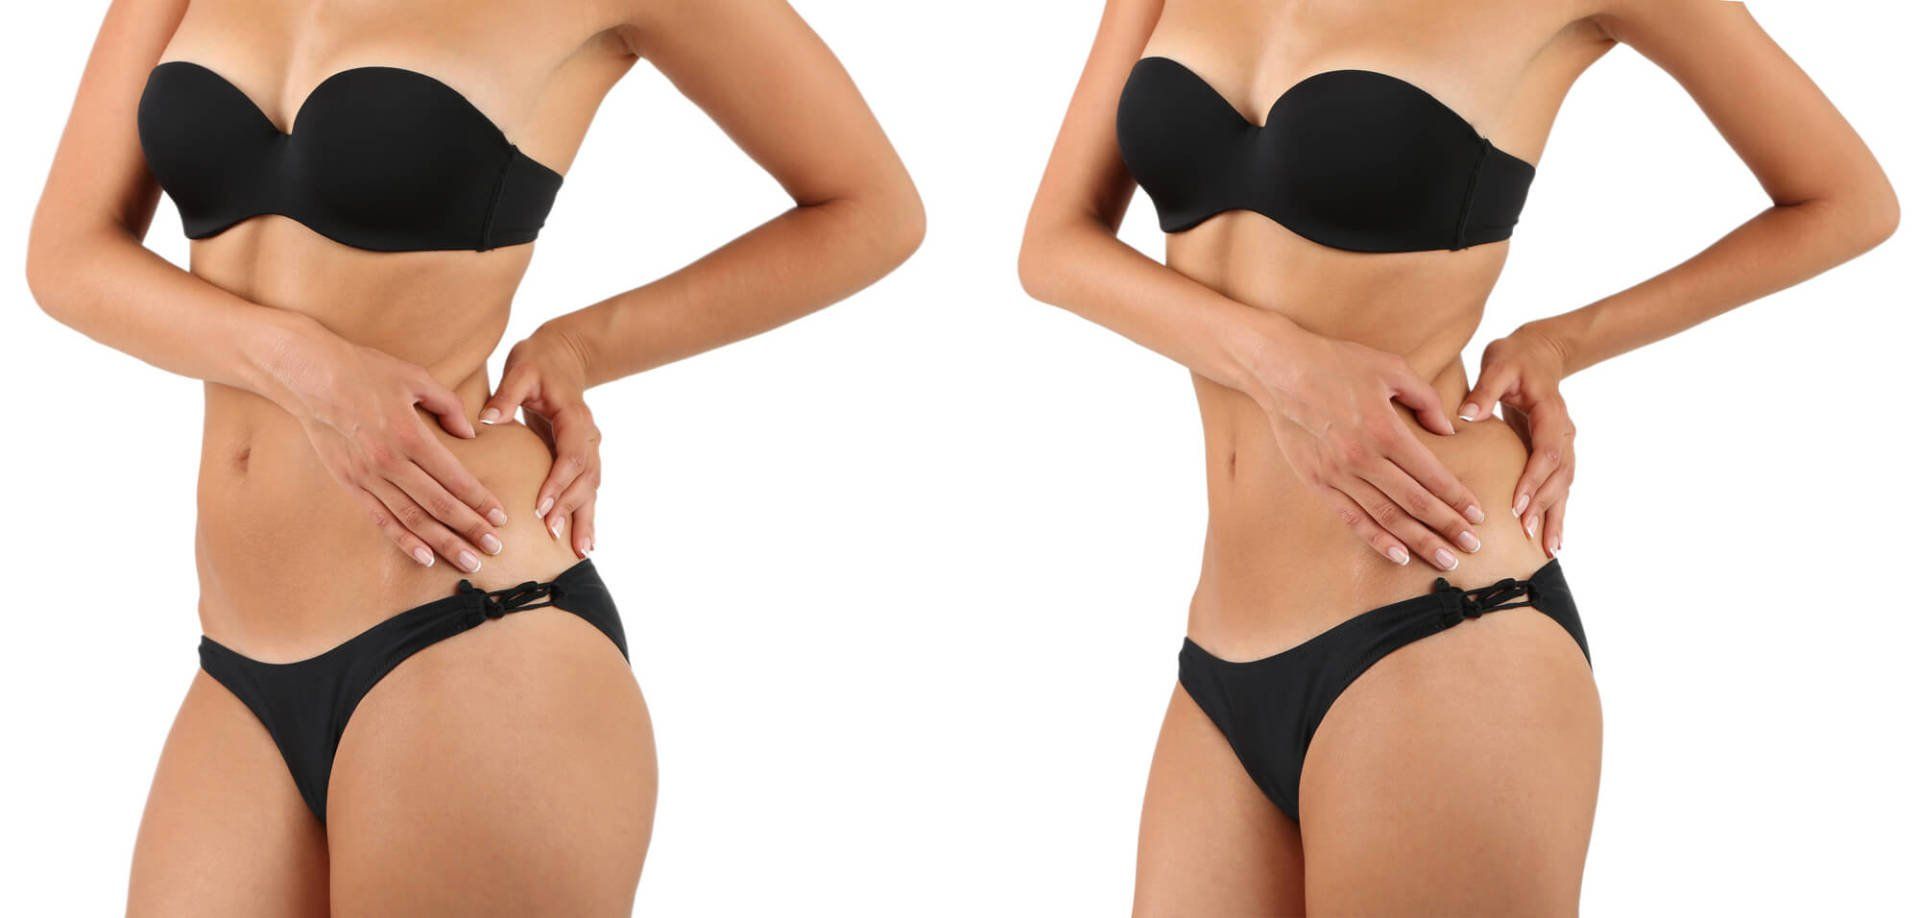 ultraschall kavitation bodyforming körperformung schlank bikinifigur silhouette